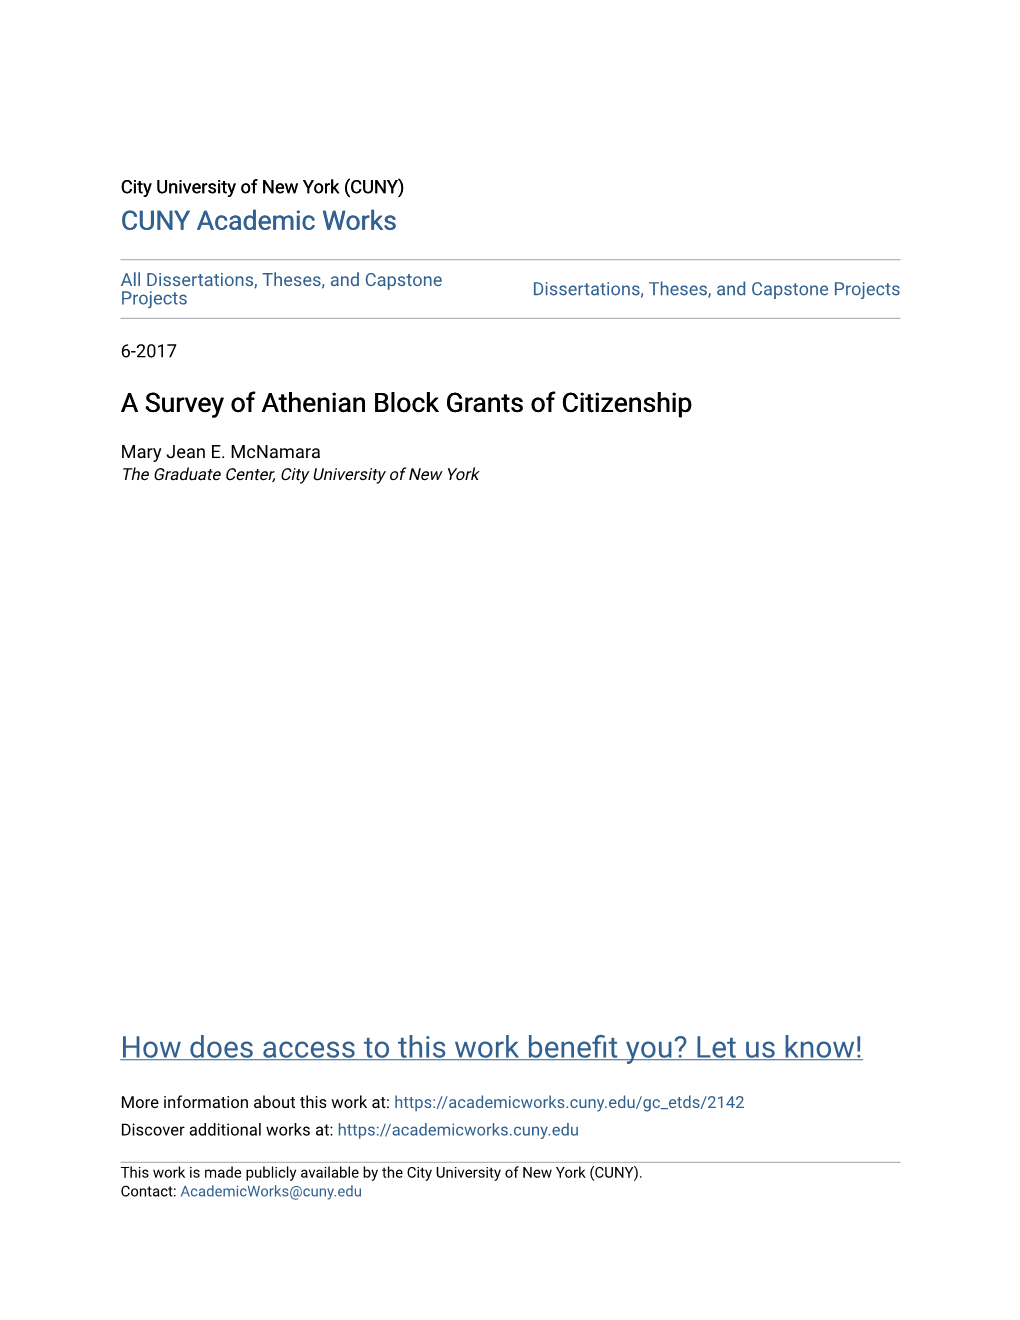 A Survey of Athenian Block Grants of Citizenship